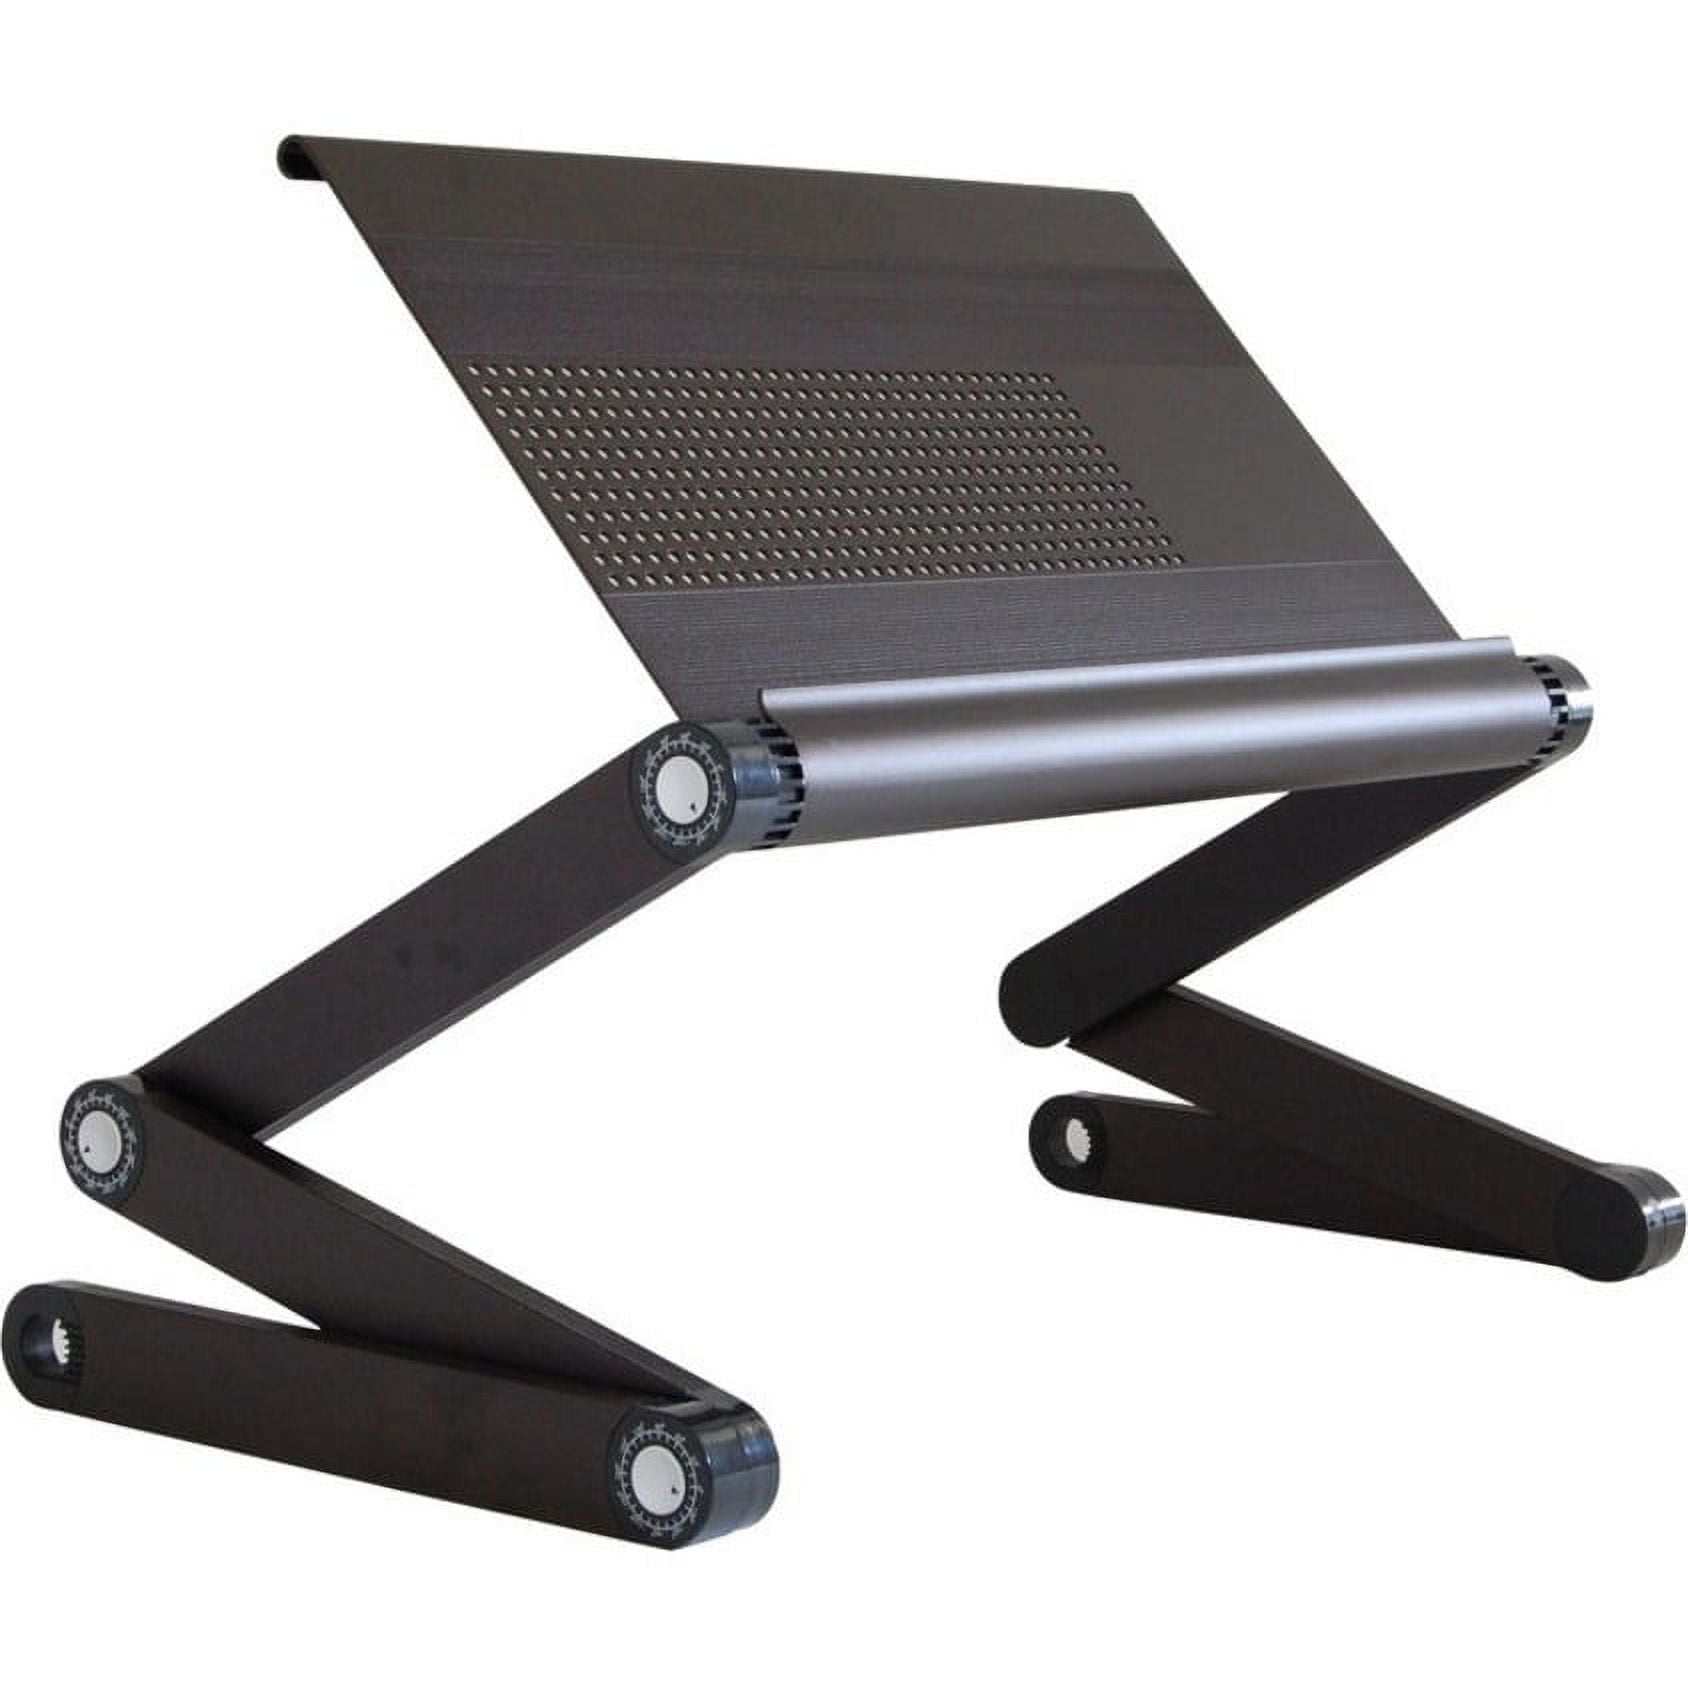 Posture-Rite Lap Desk